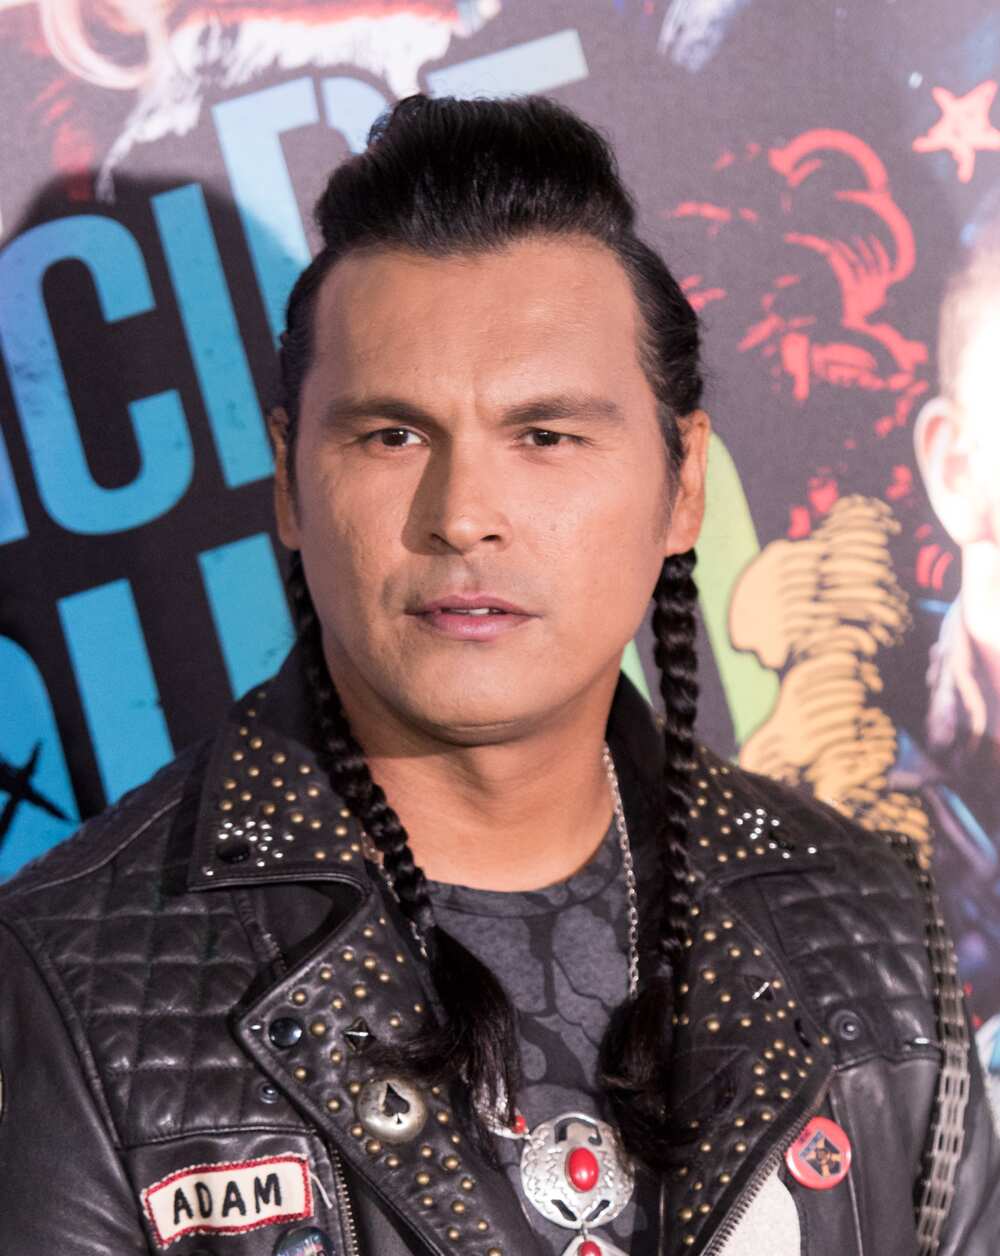 Native American actor